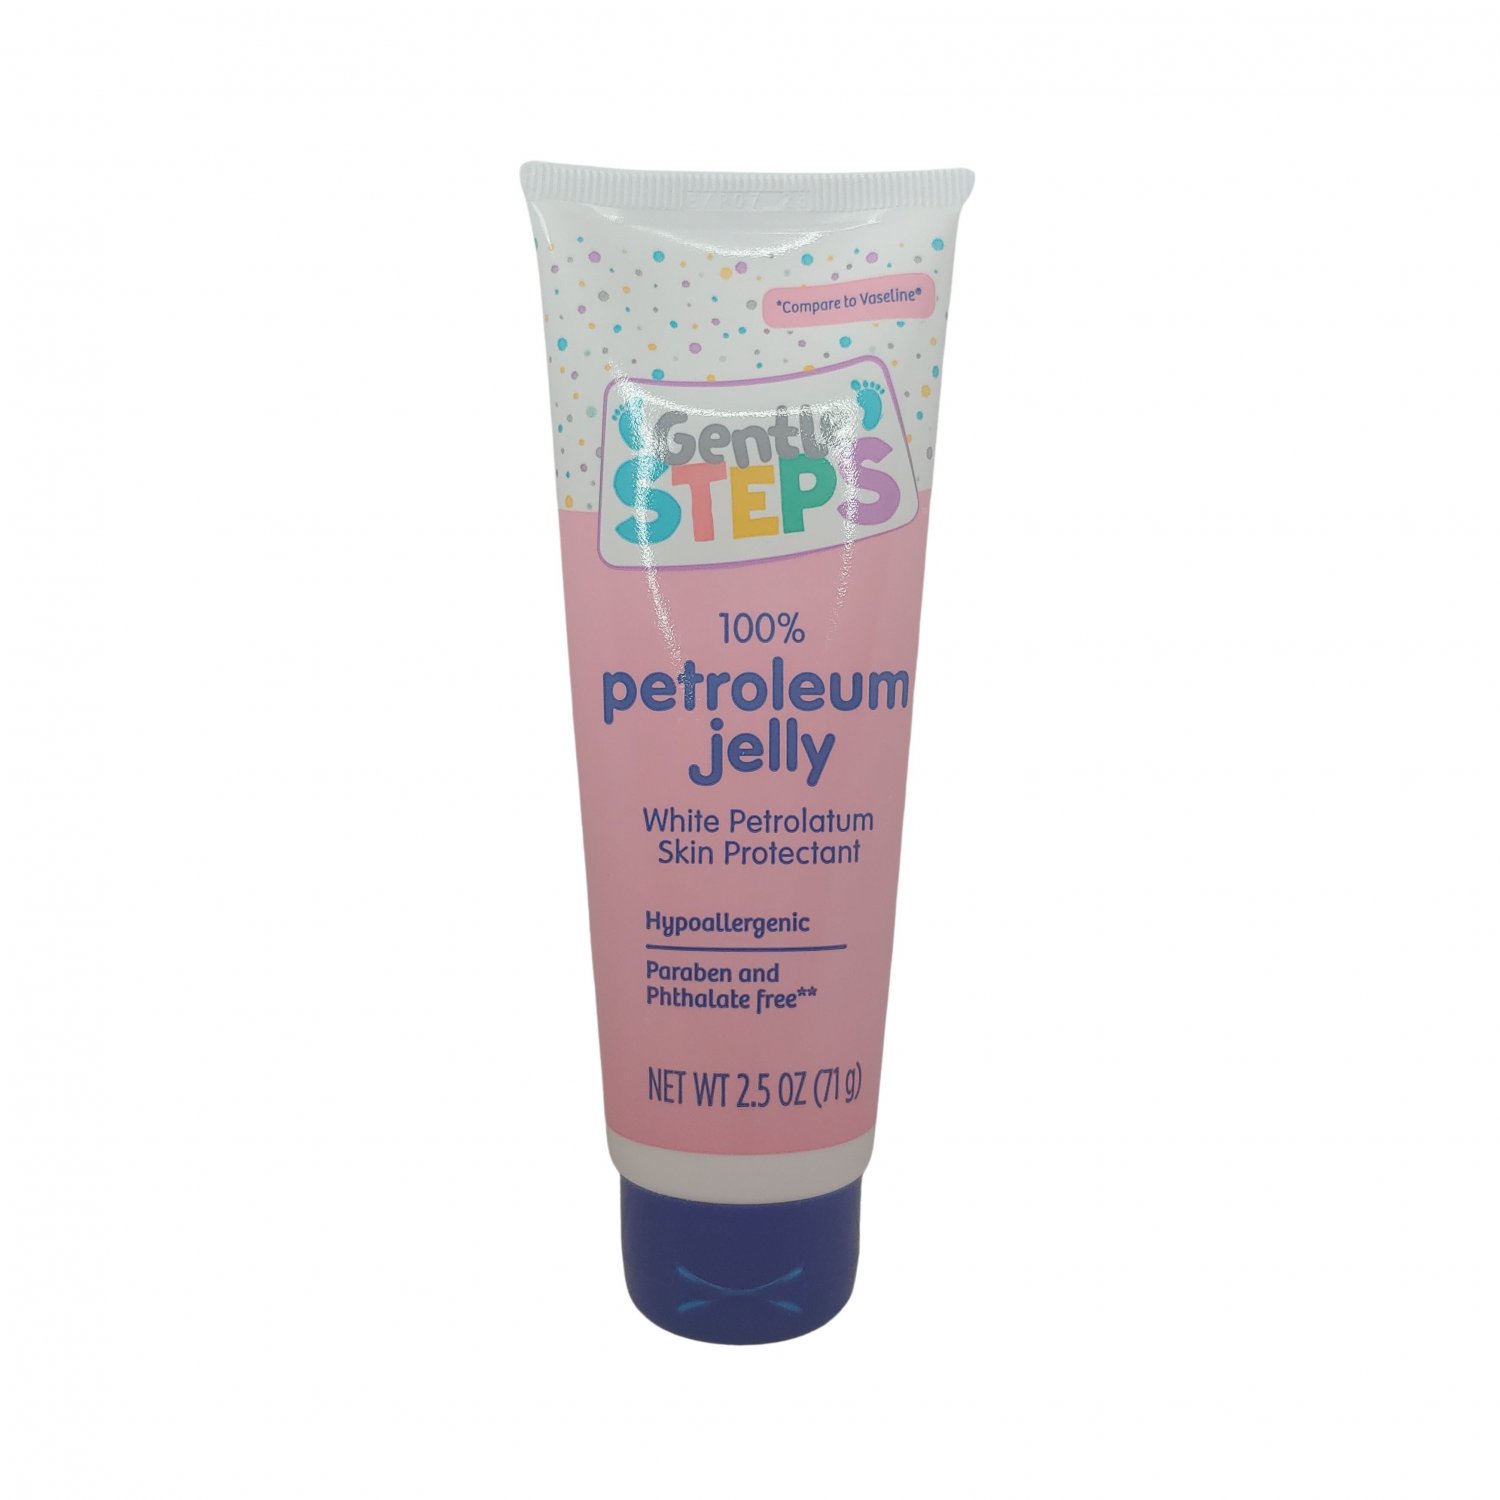 Gentle Steps 100% Petroleum Jelly Skin Protectant, 2.5 oz (71 g)